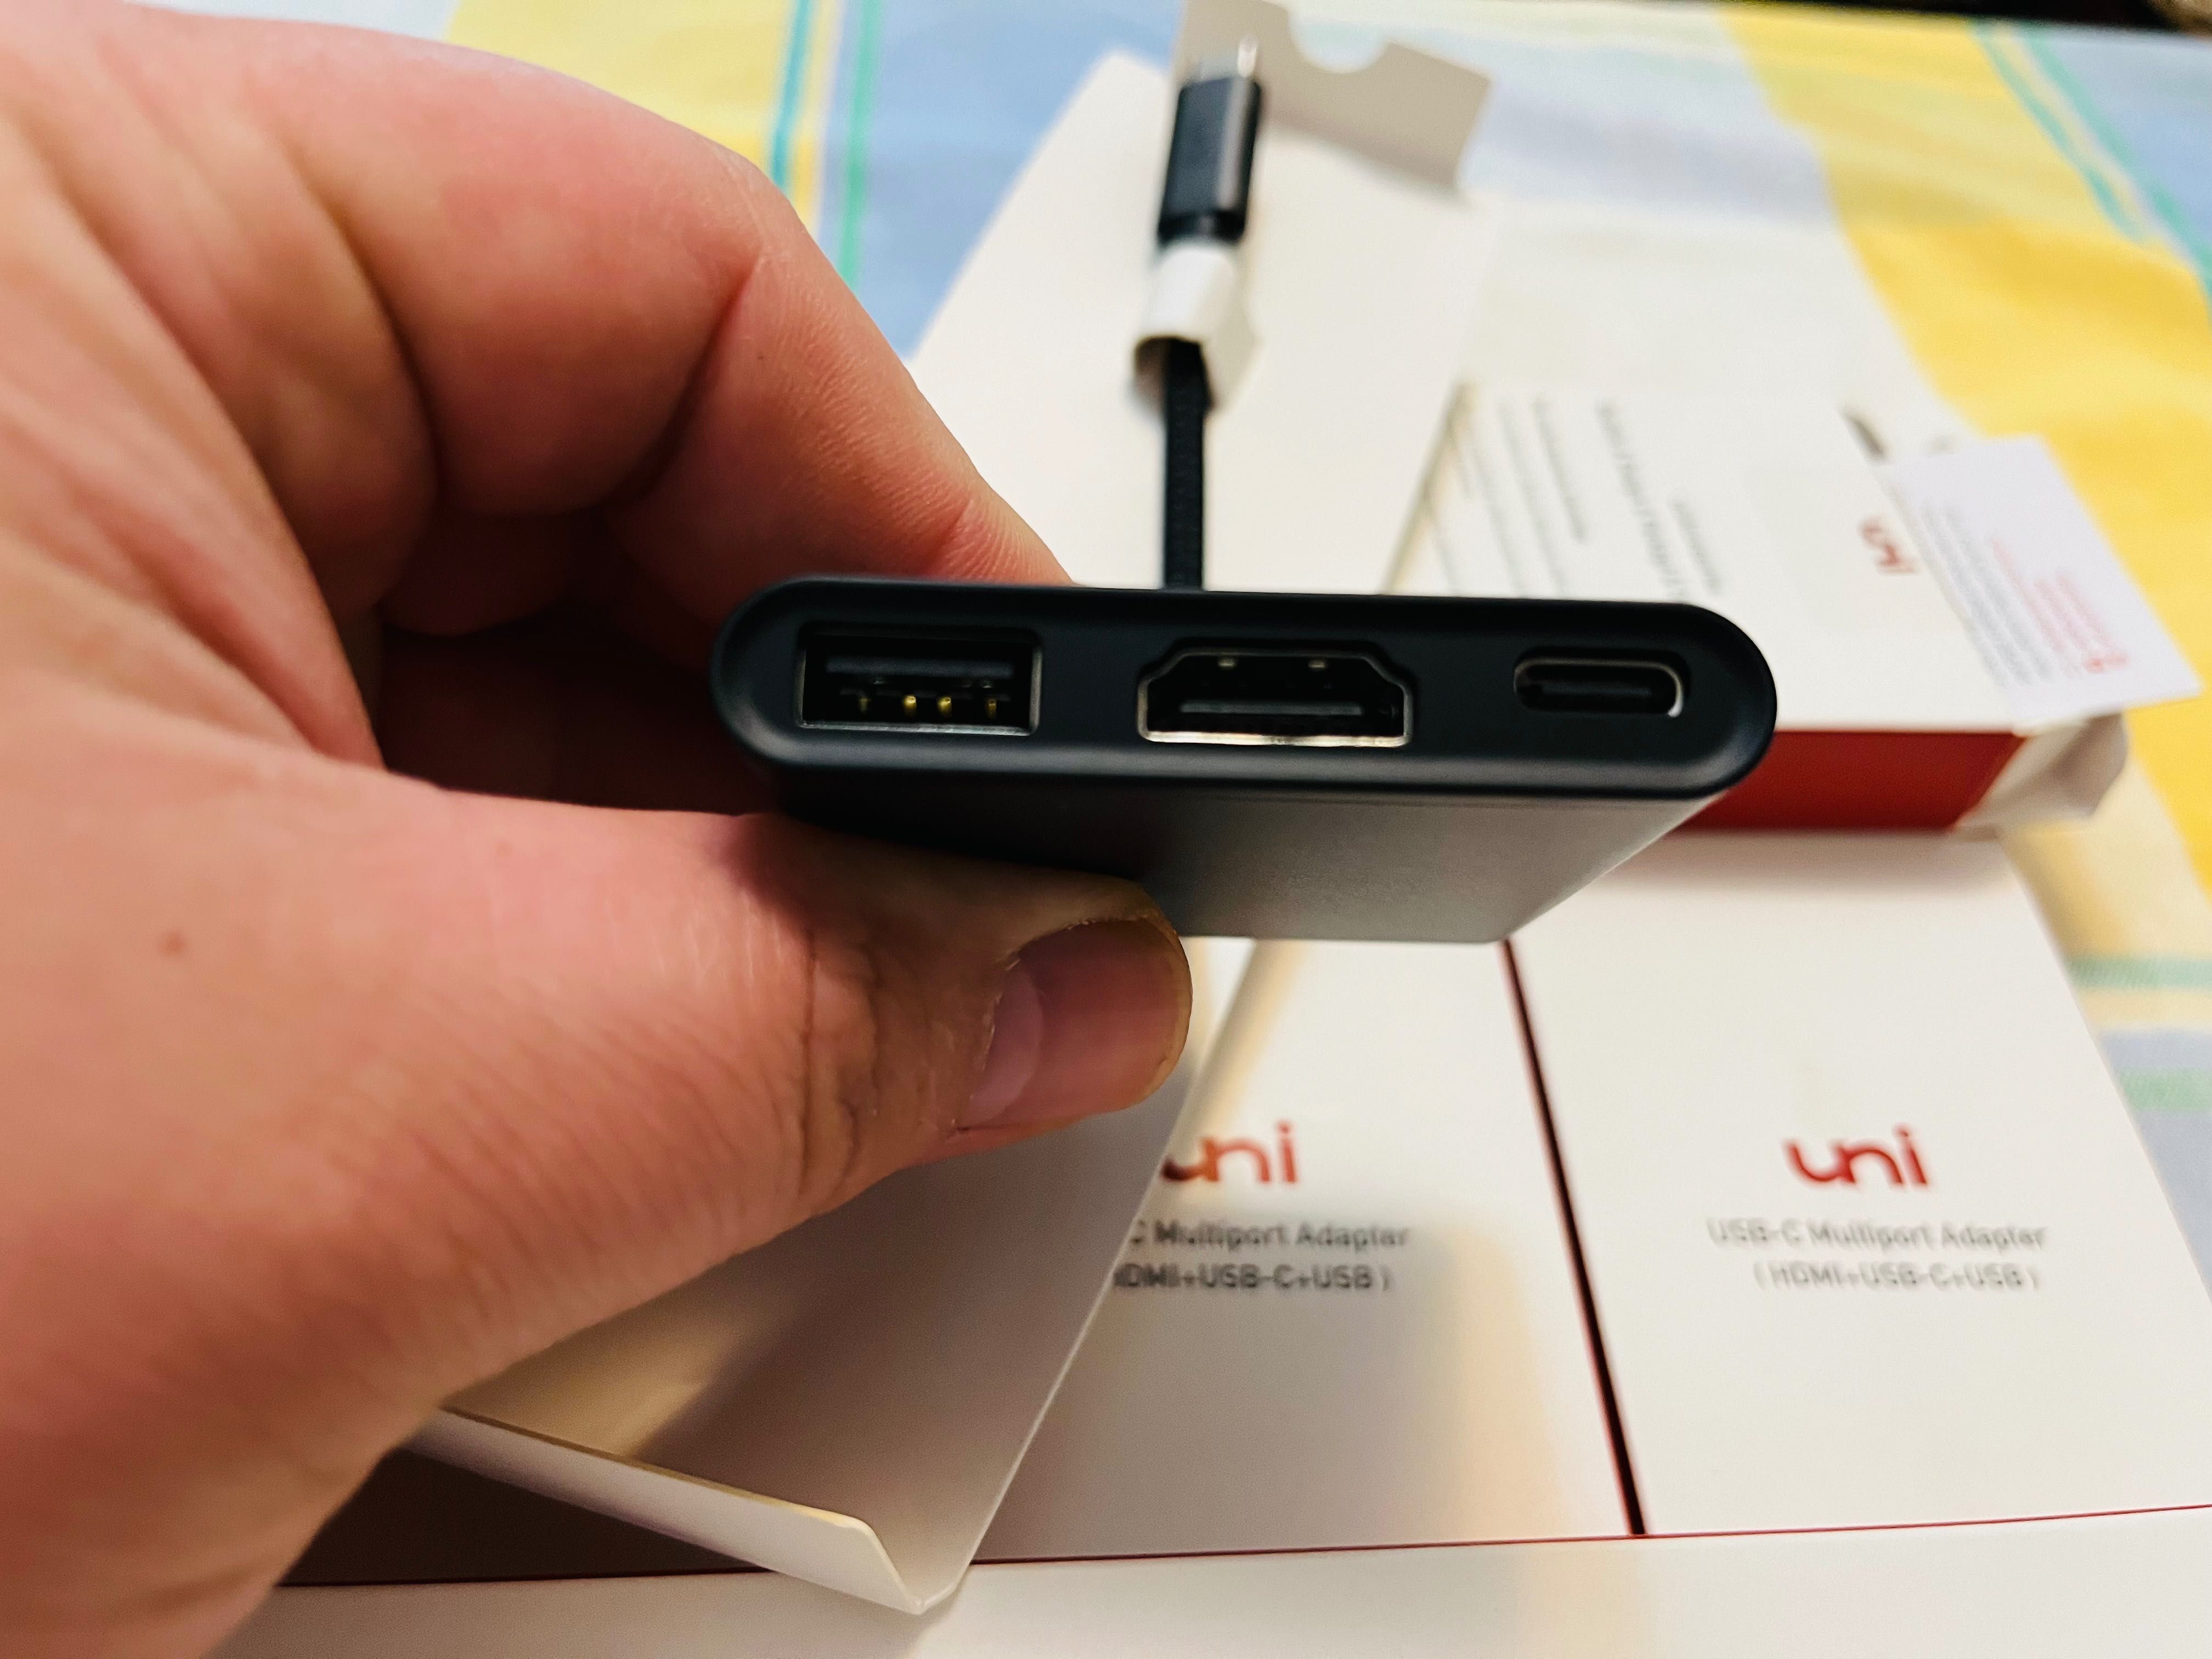 uni USB C HDMI Adapter 3 in 1, USB-C Multiport Adapter